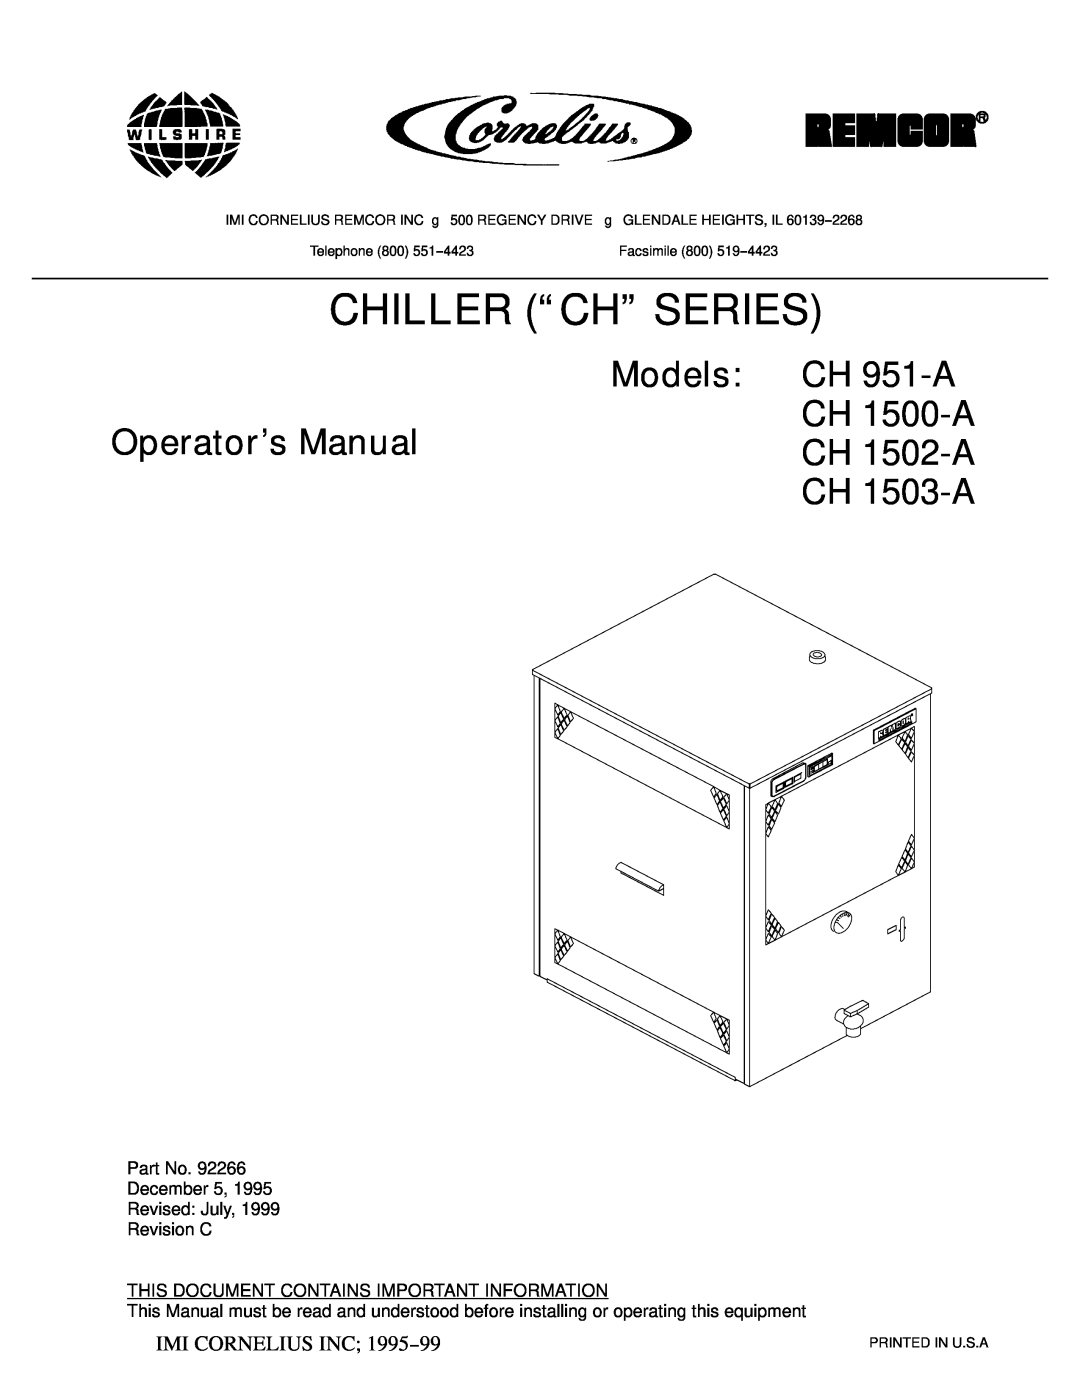 Cornelius CH Series manual Chiller “Ch” Series, Models CH 951-A CH 1500-A Operator’s ManualCH 1502-A CH 1503-A 